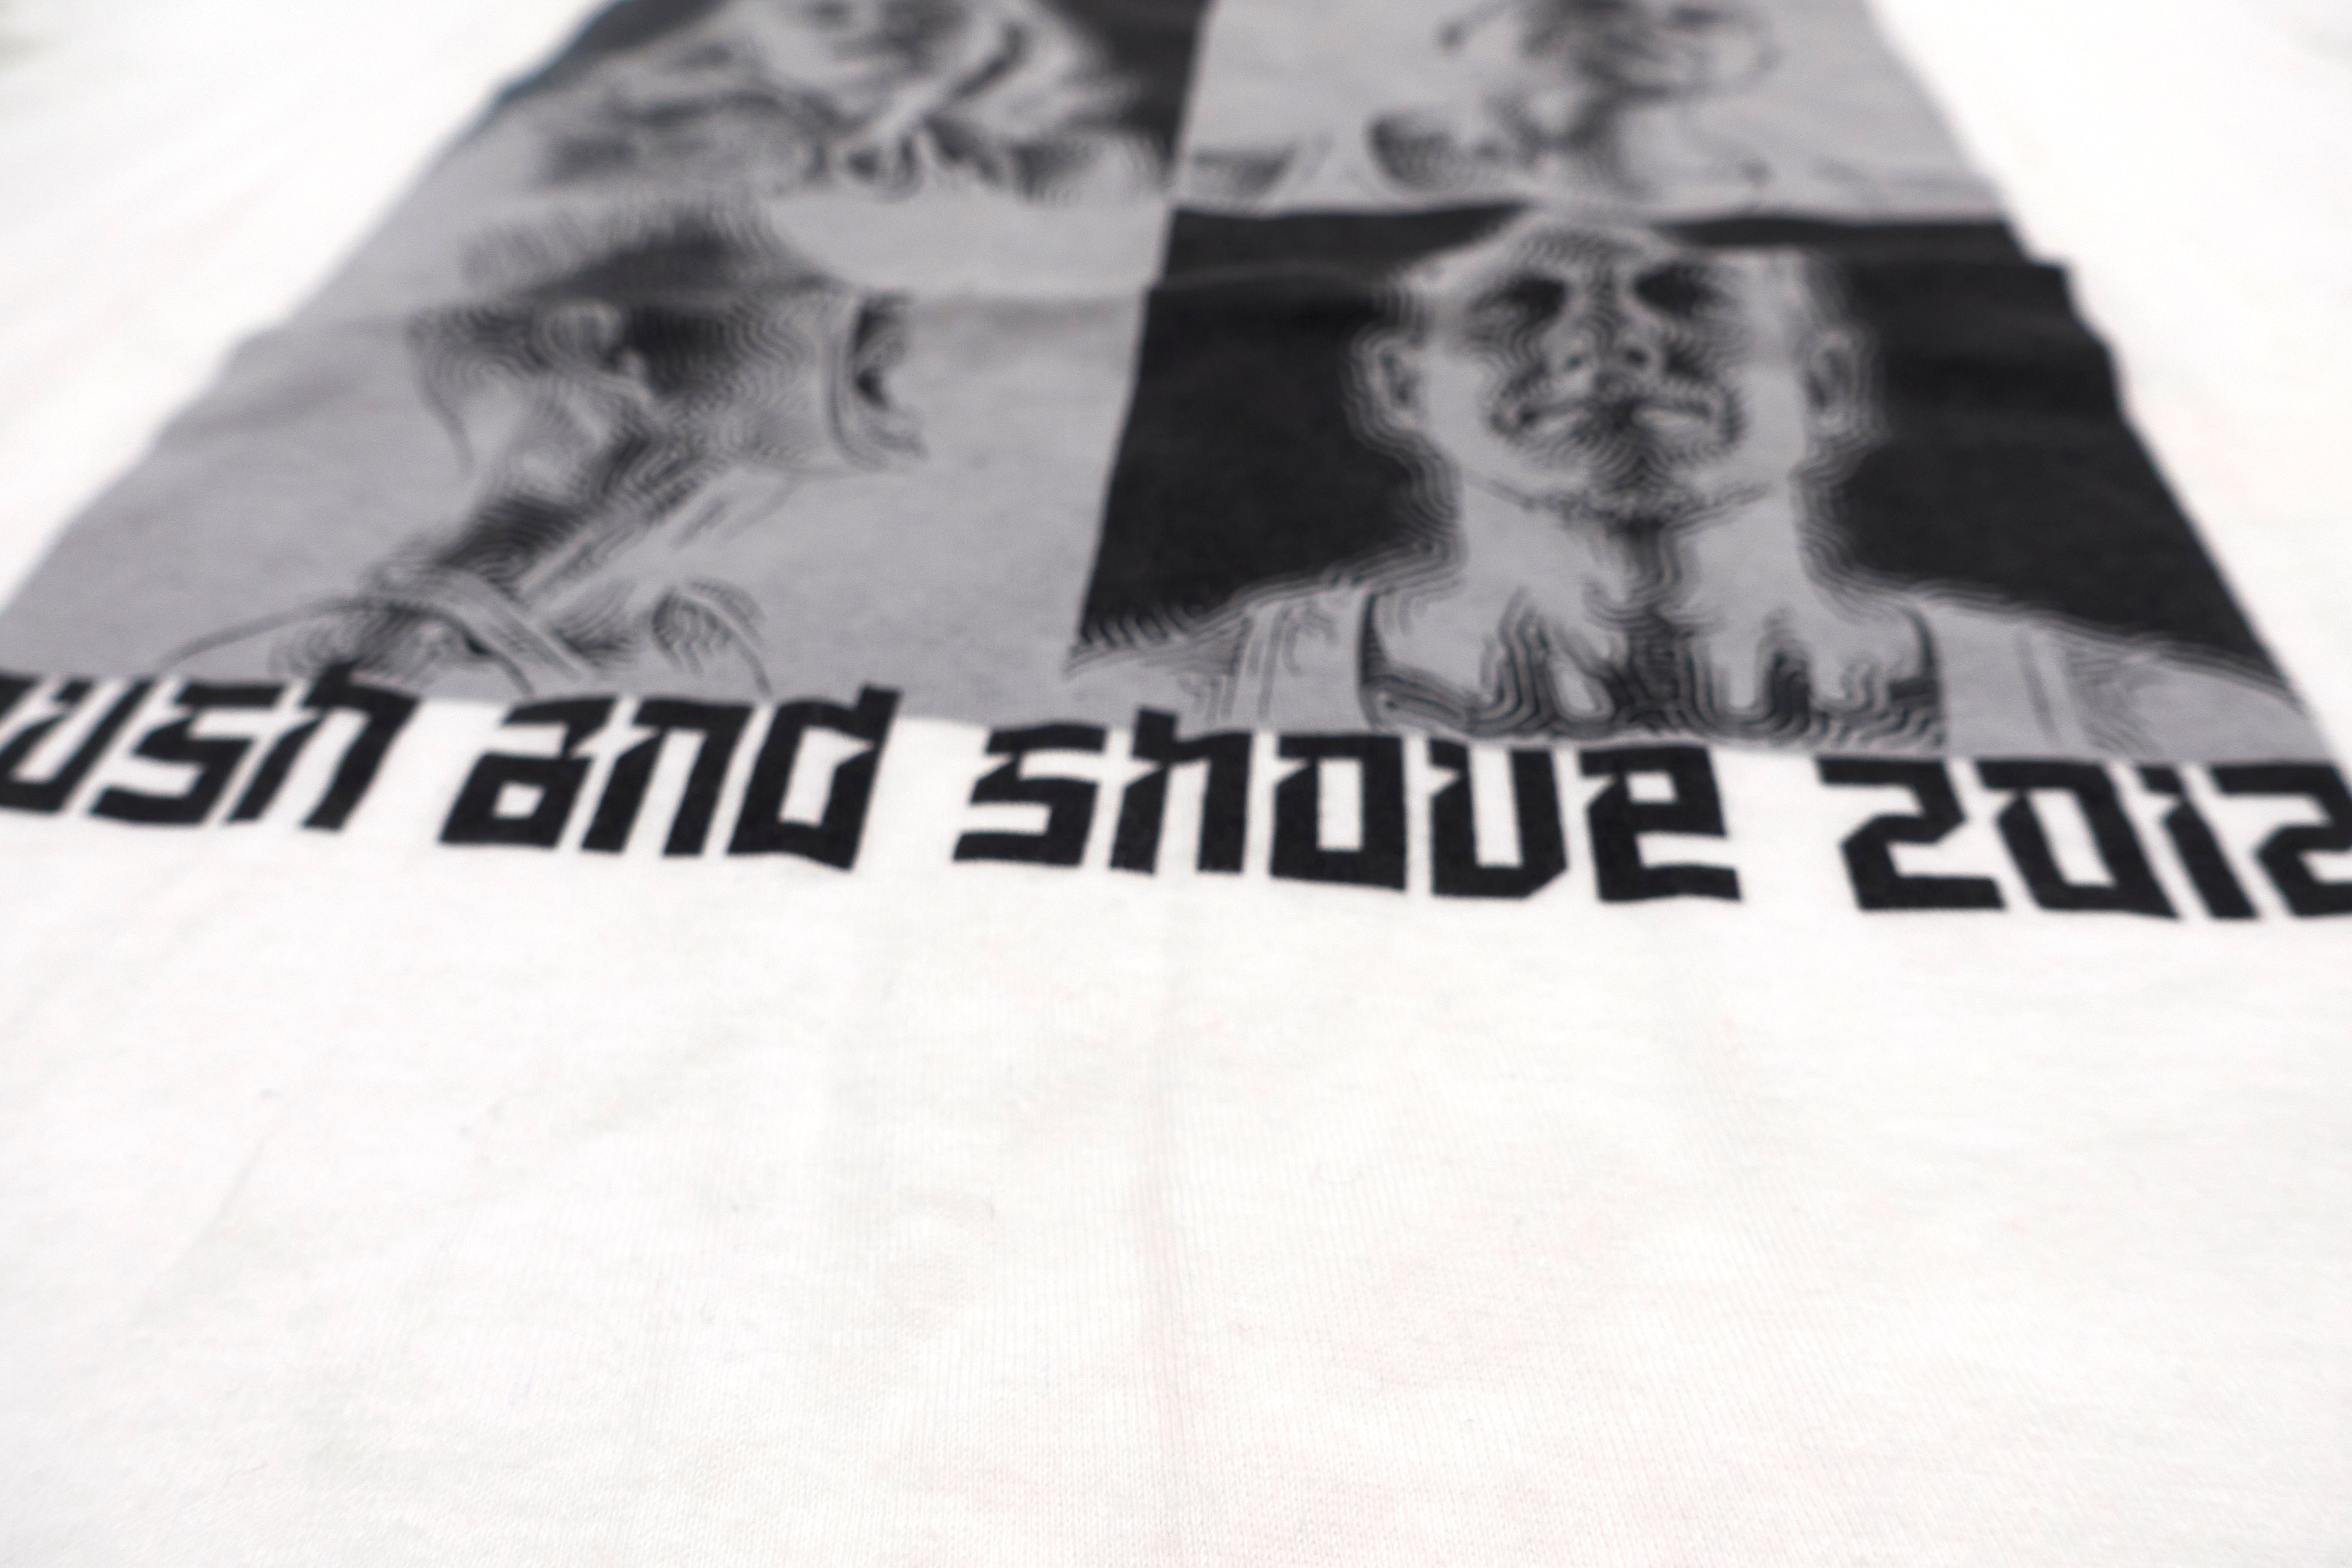 No Doubt - Push And Shove 7 Night Stand 2012 Tour Shirt Size Medium